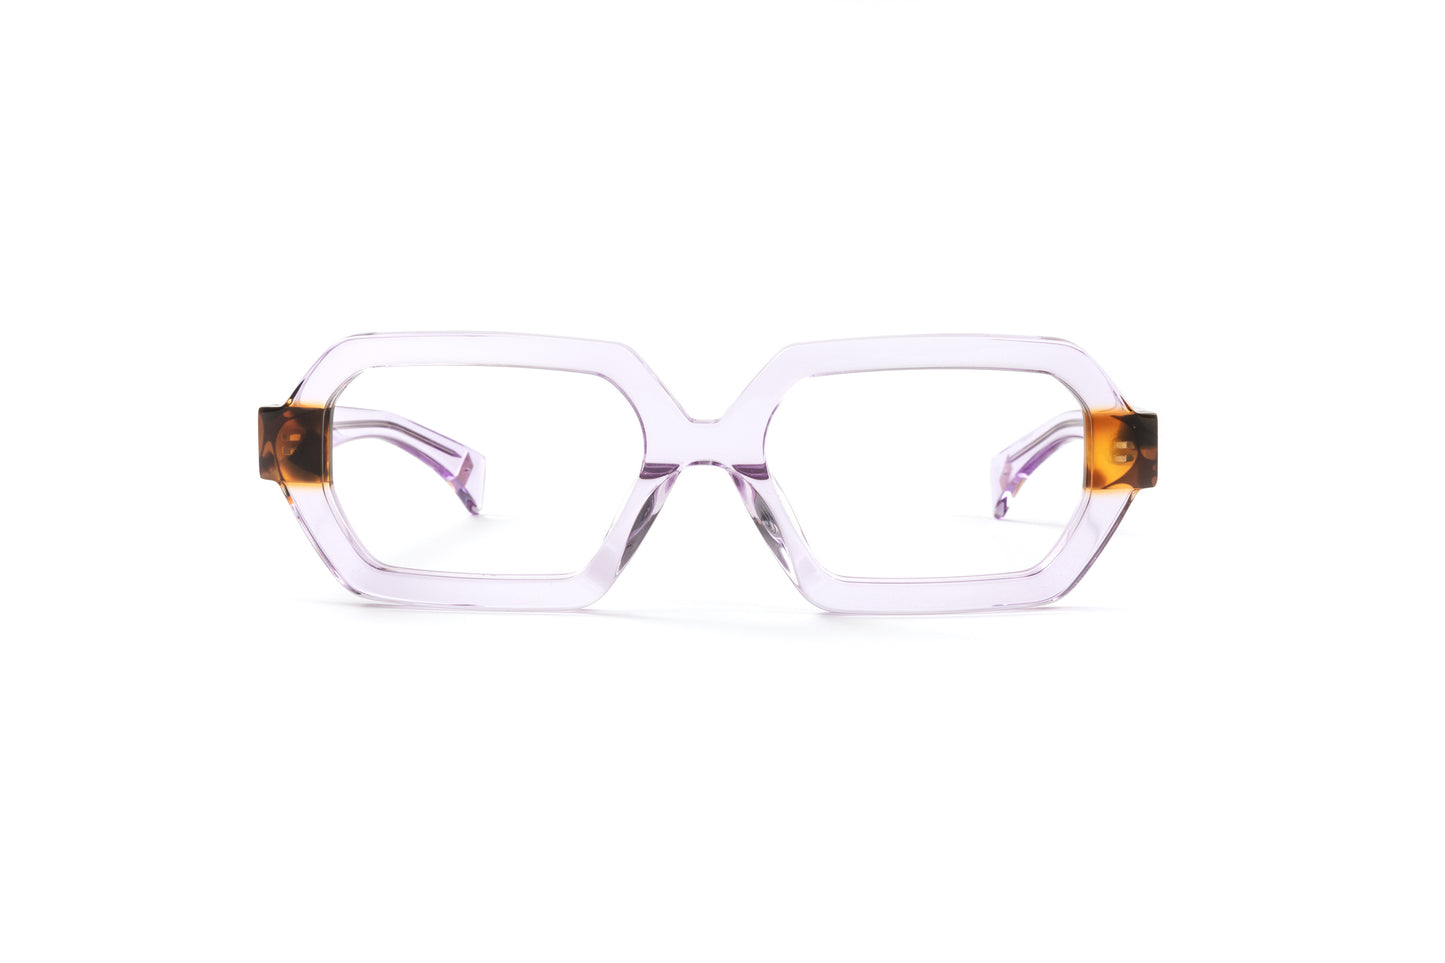 louis vuitton reading glasses for women